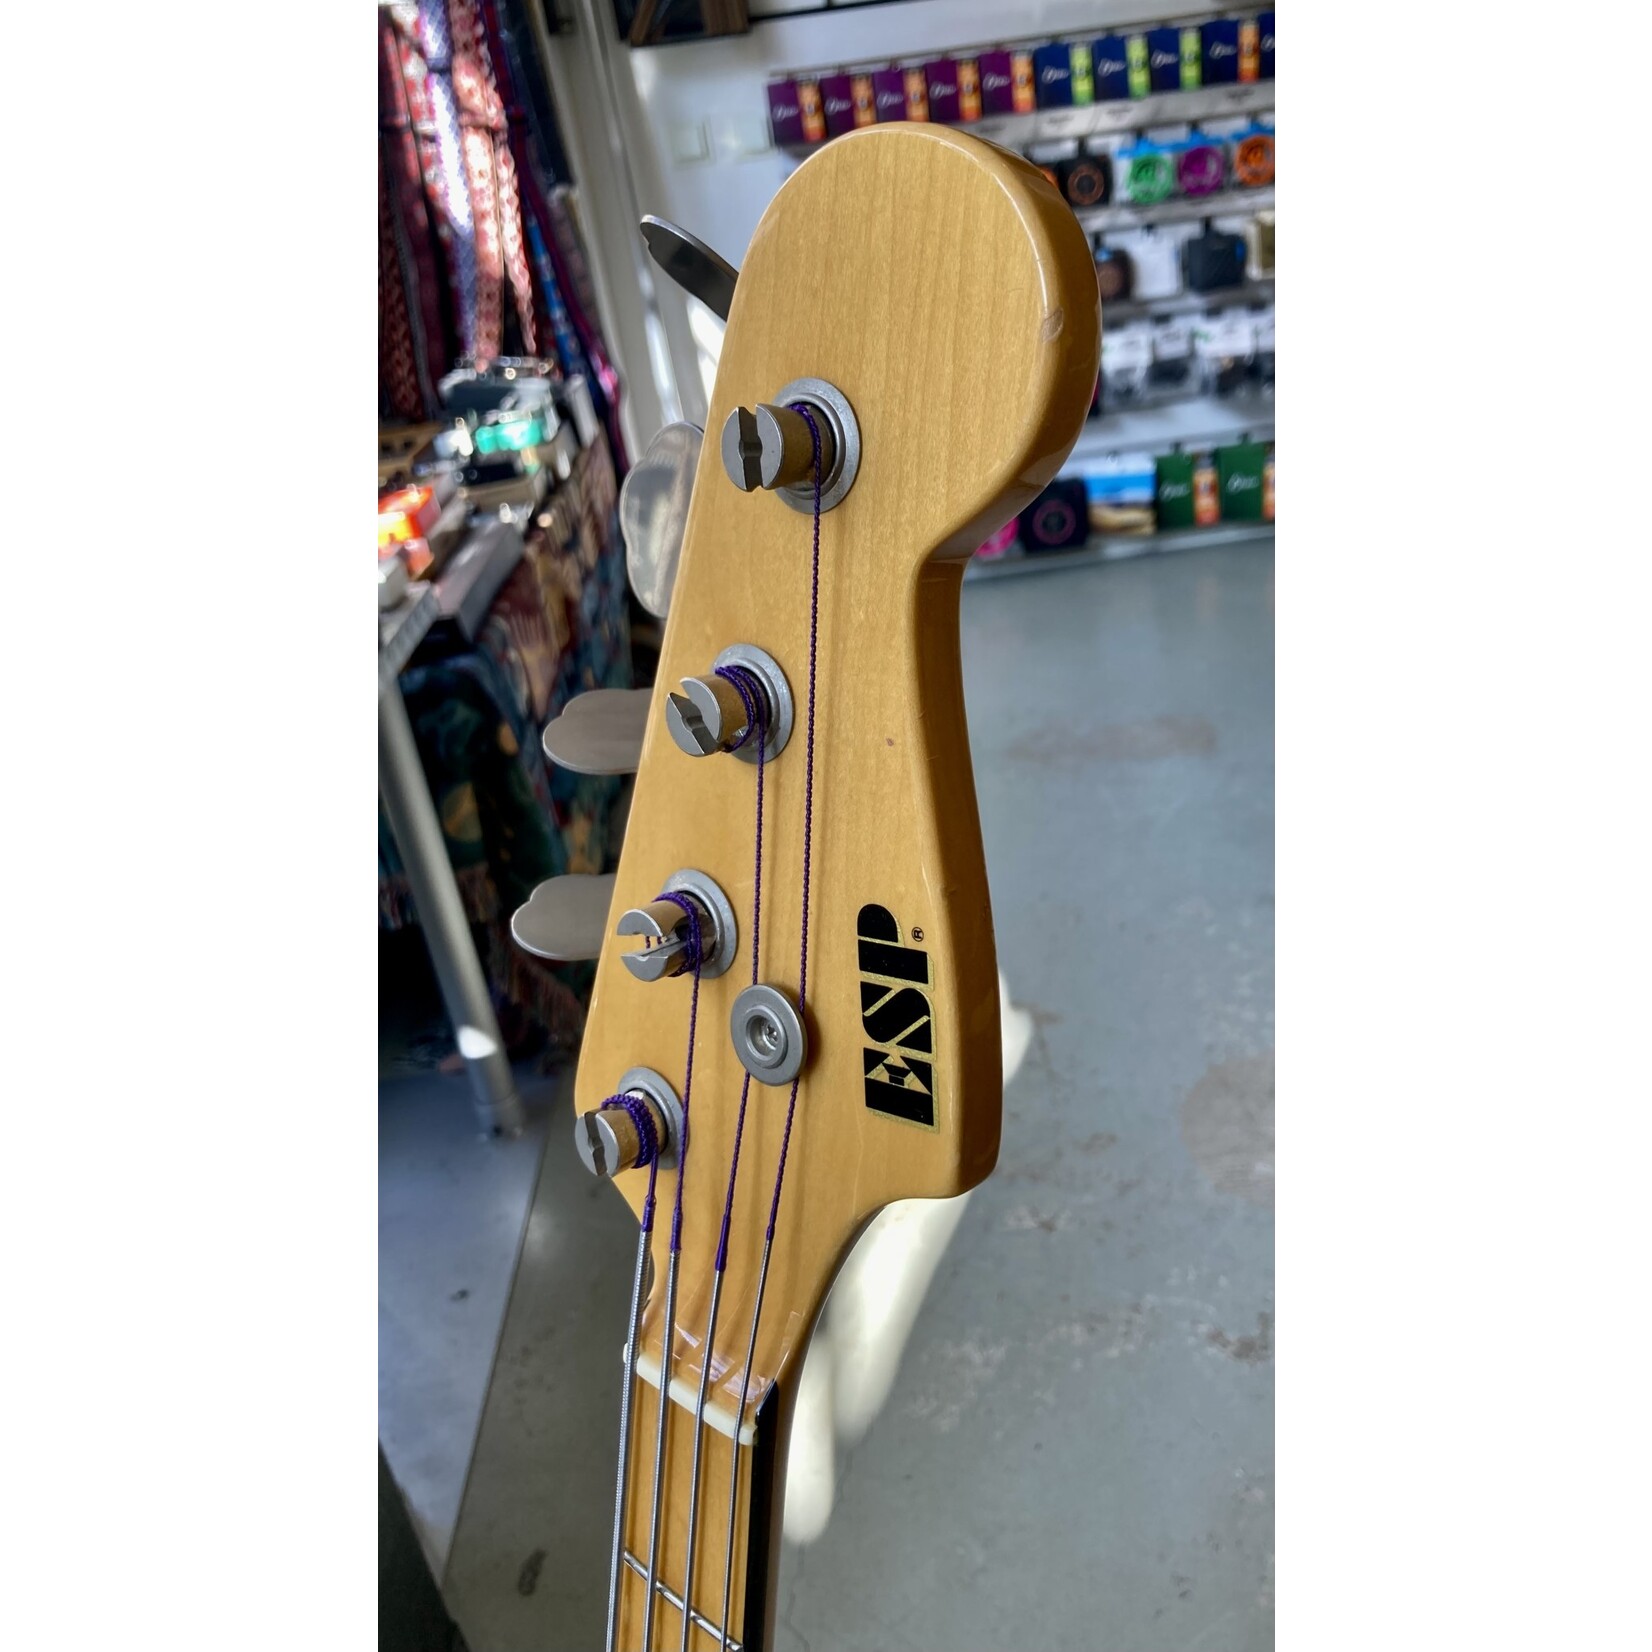 ESP ESP Crafthouse (ESP Customshop) Jazz Bass 2004